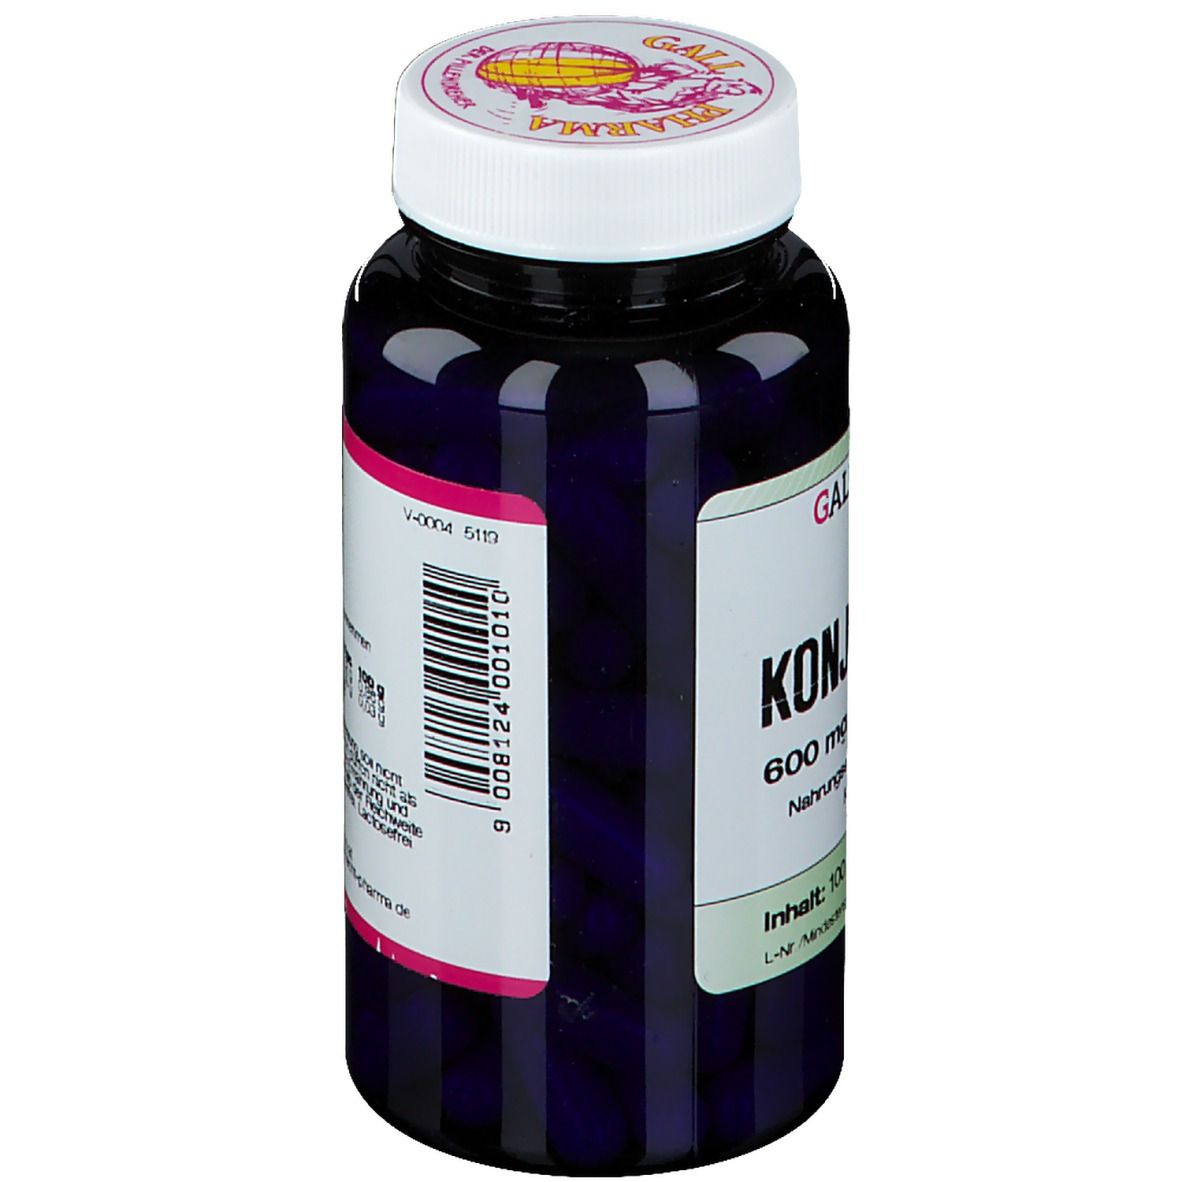 GALL PHARMA Konjacmehl 600 mg